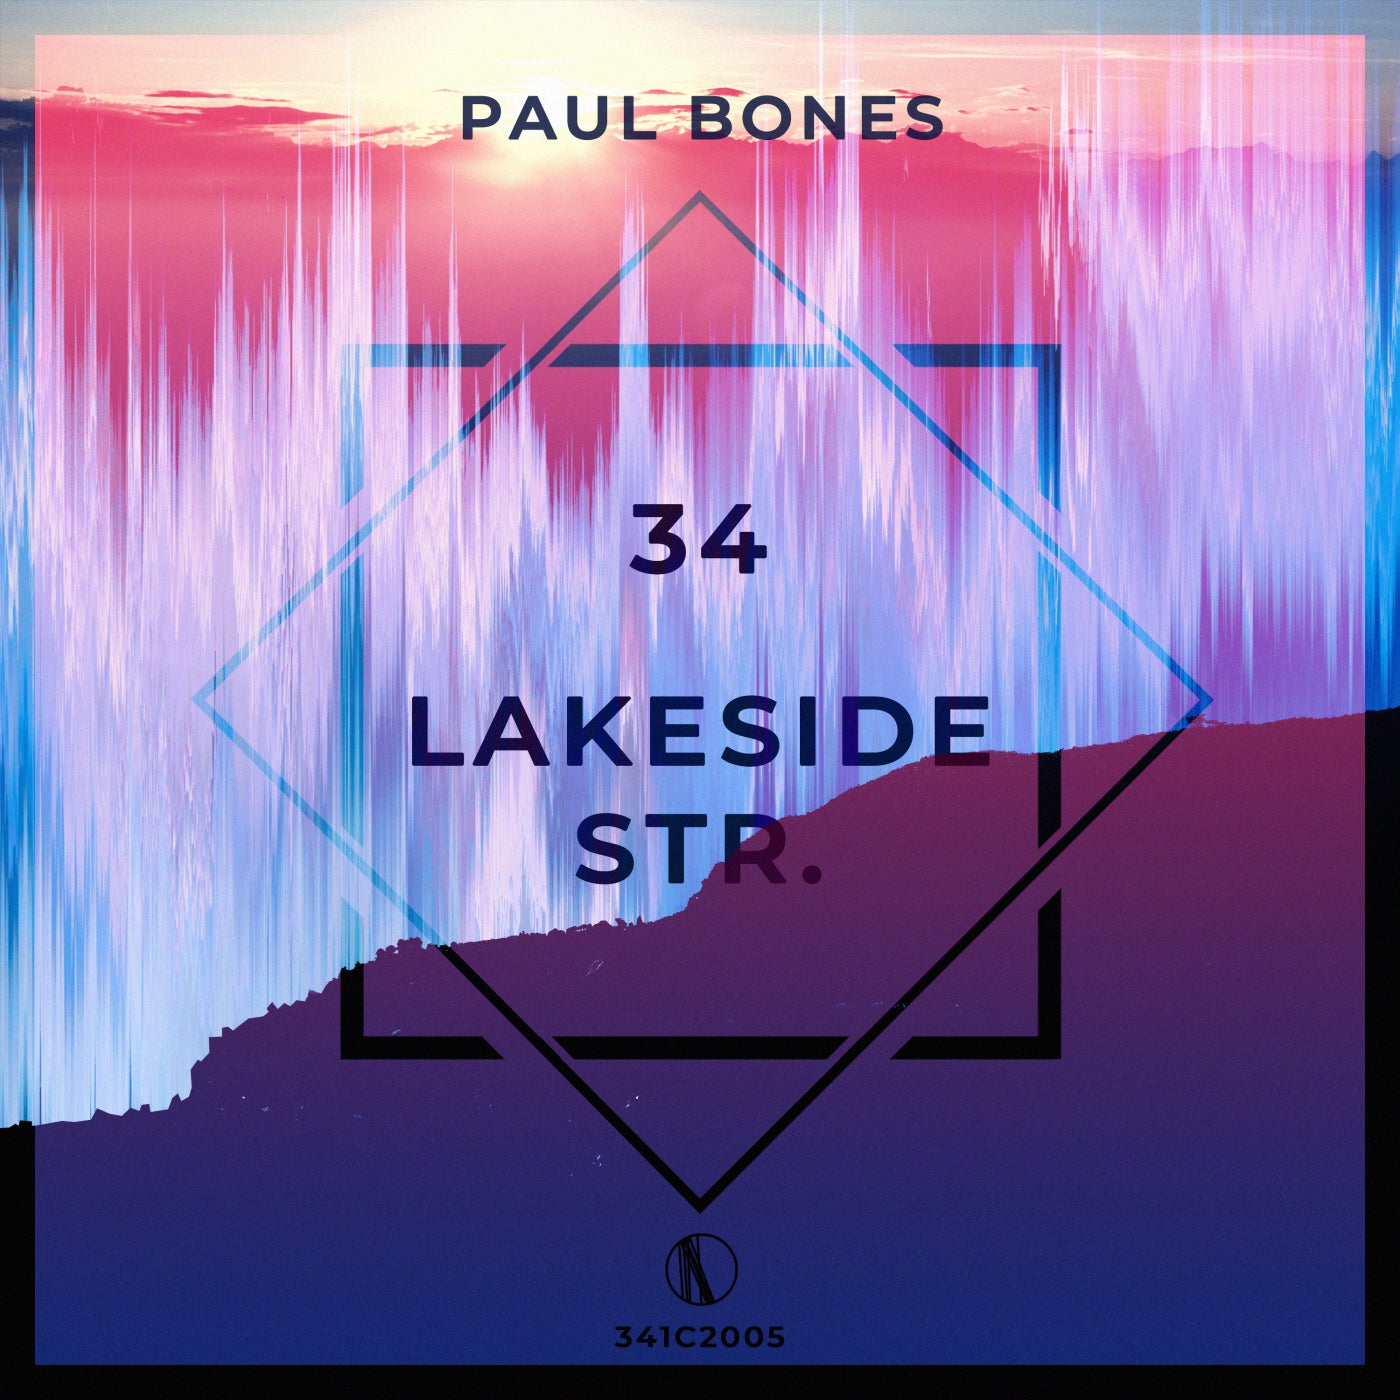 Paul Bones (CH) – 34, Lakeside Str. [341C20005]